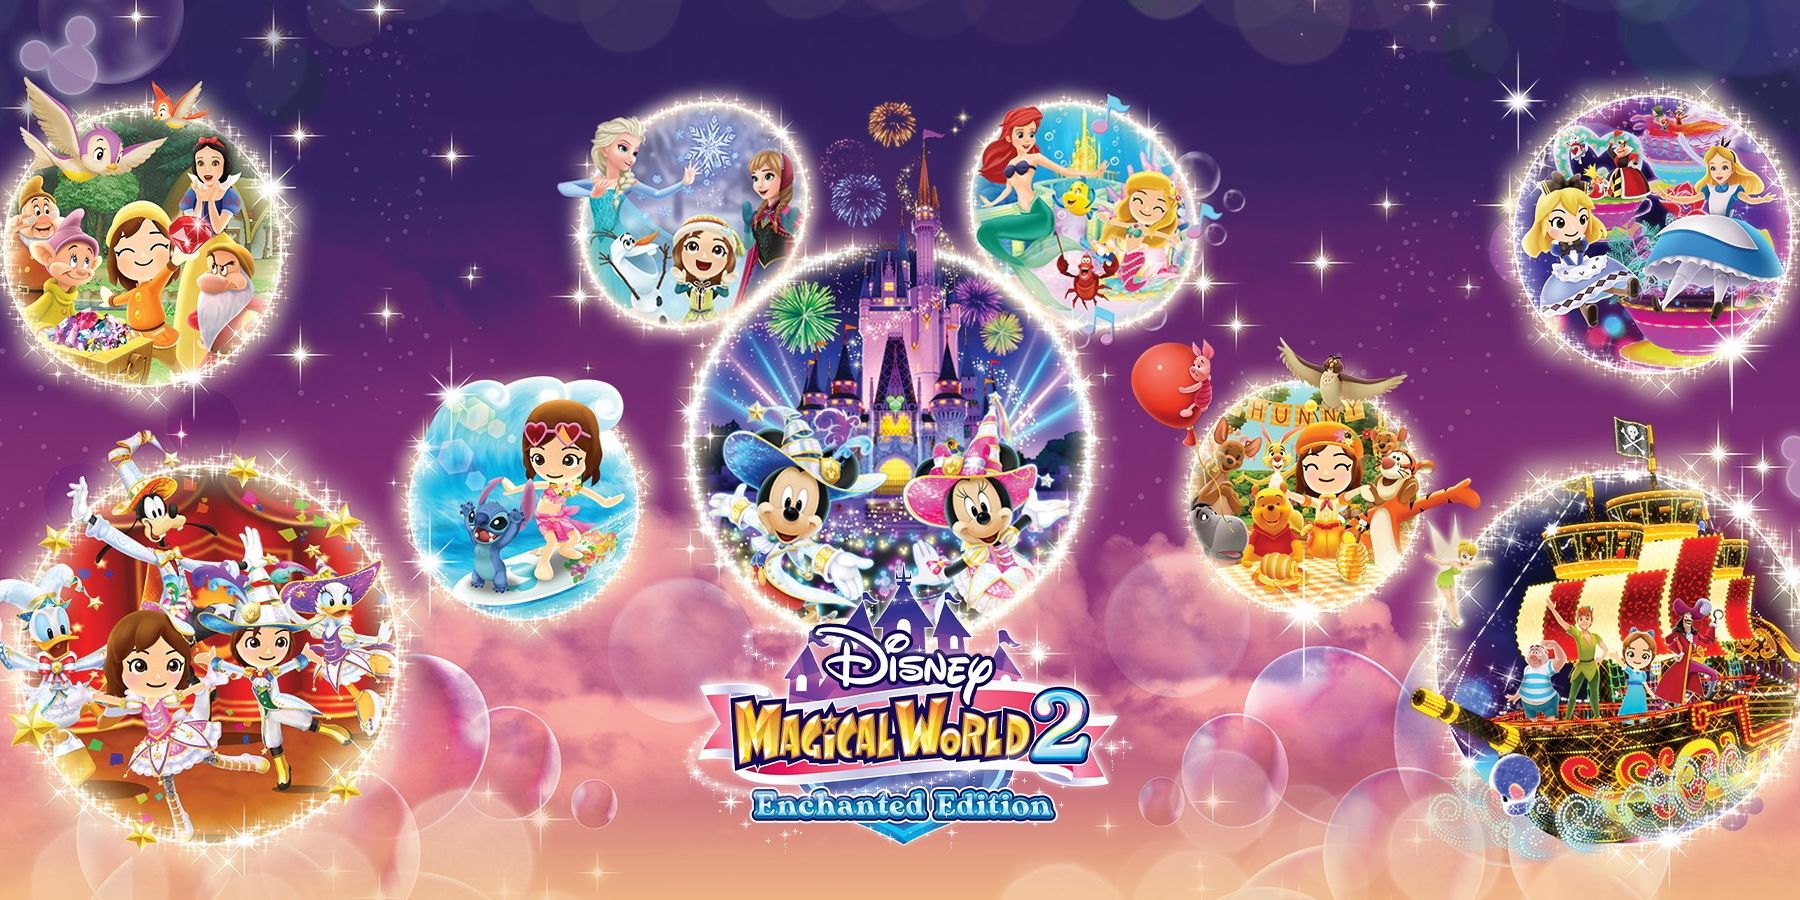 Disney Magical World 2: Enchanted Edition nadchodzi w tym roku